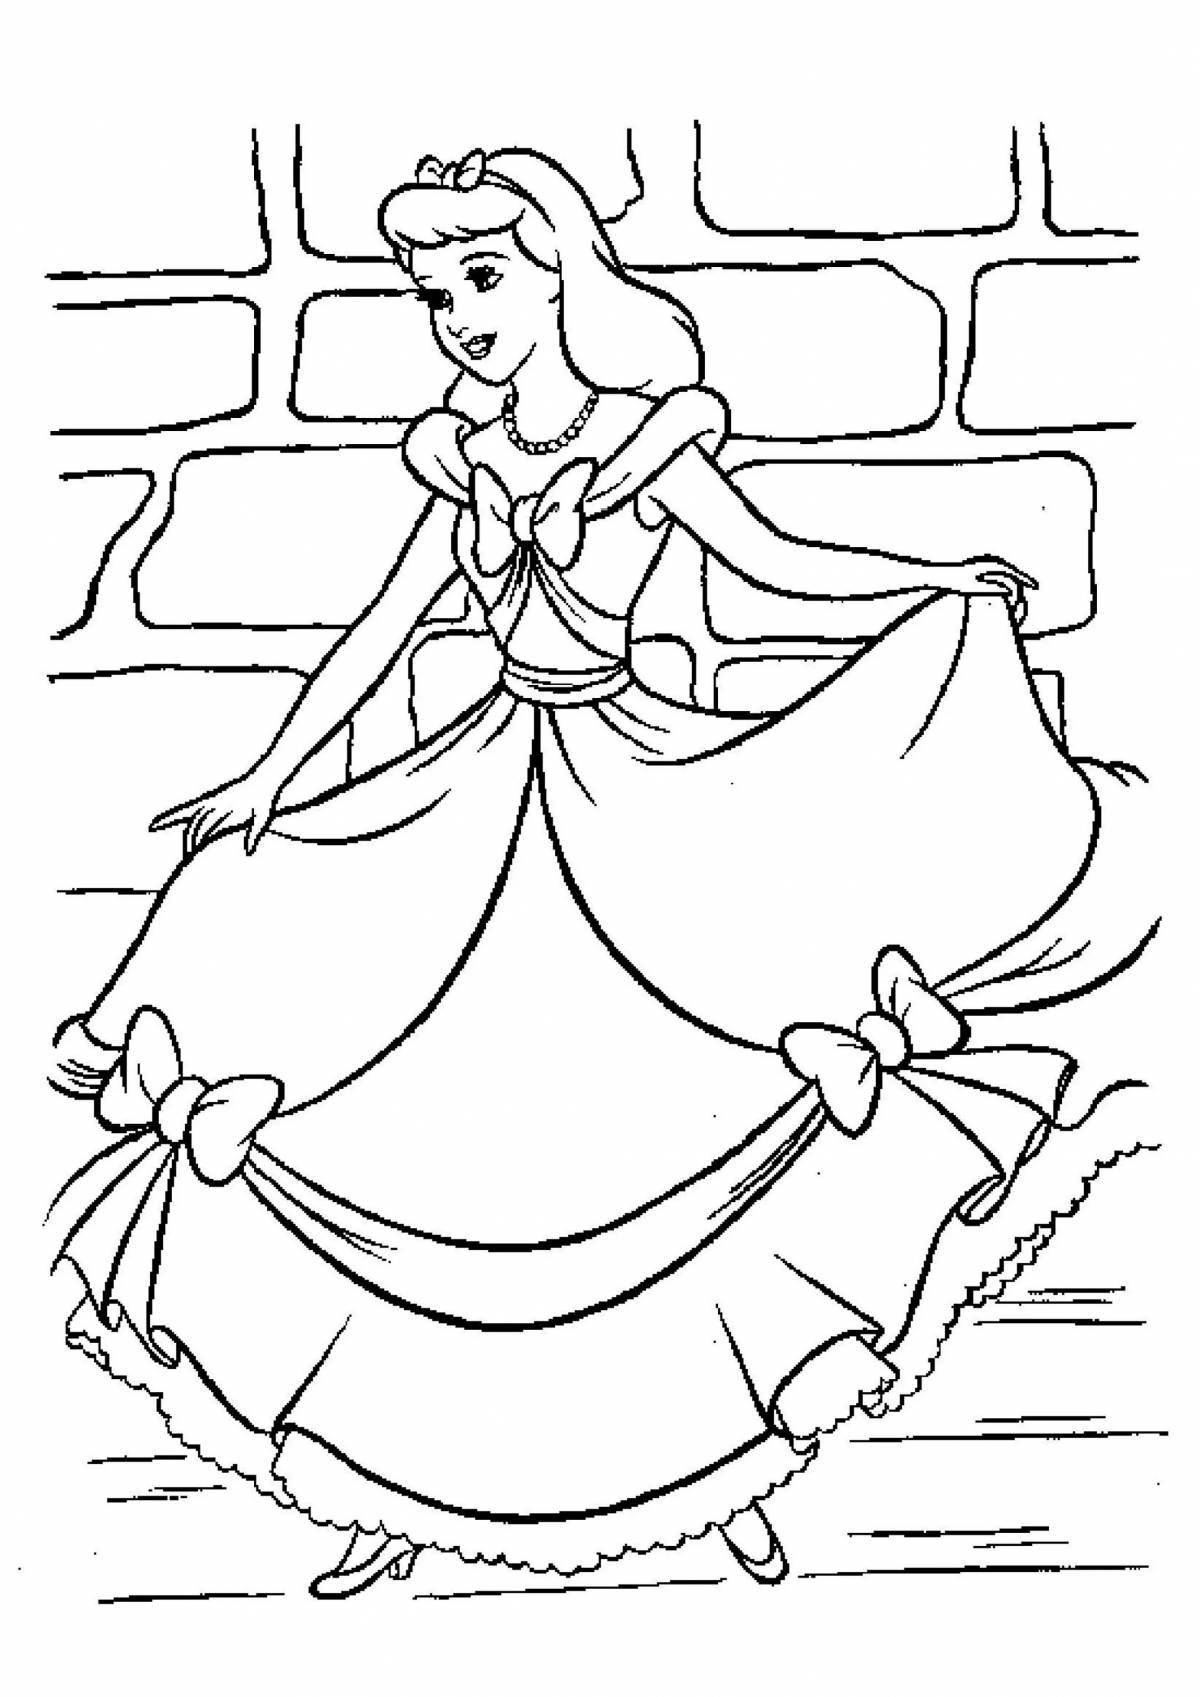 Exquisite Cinderella coloring book for kids